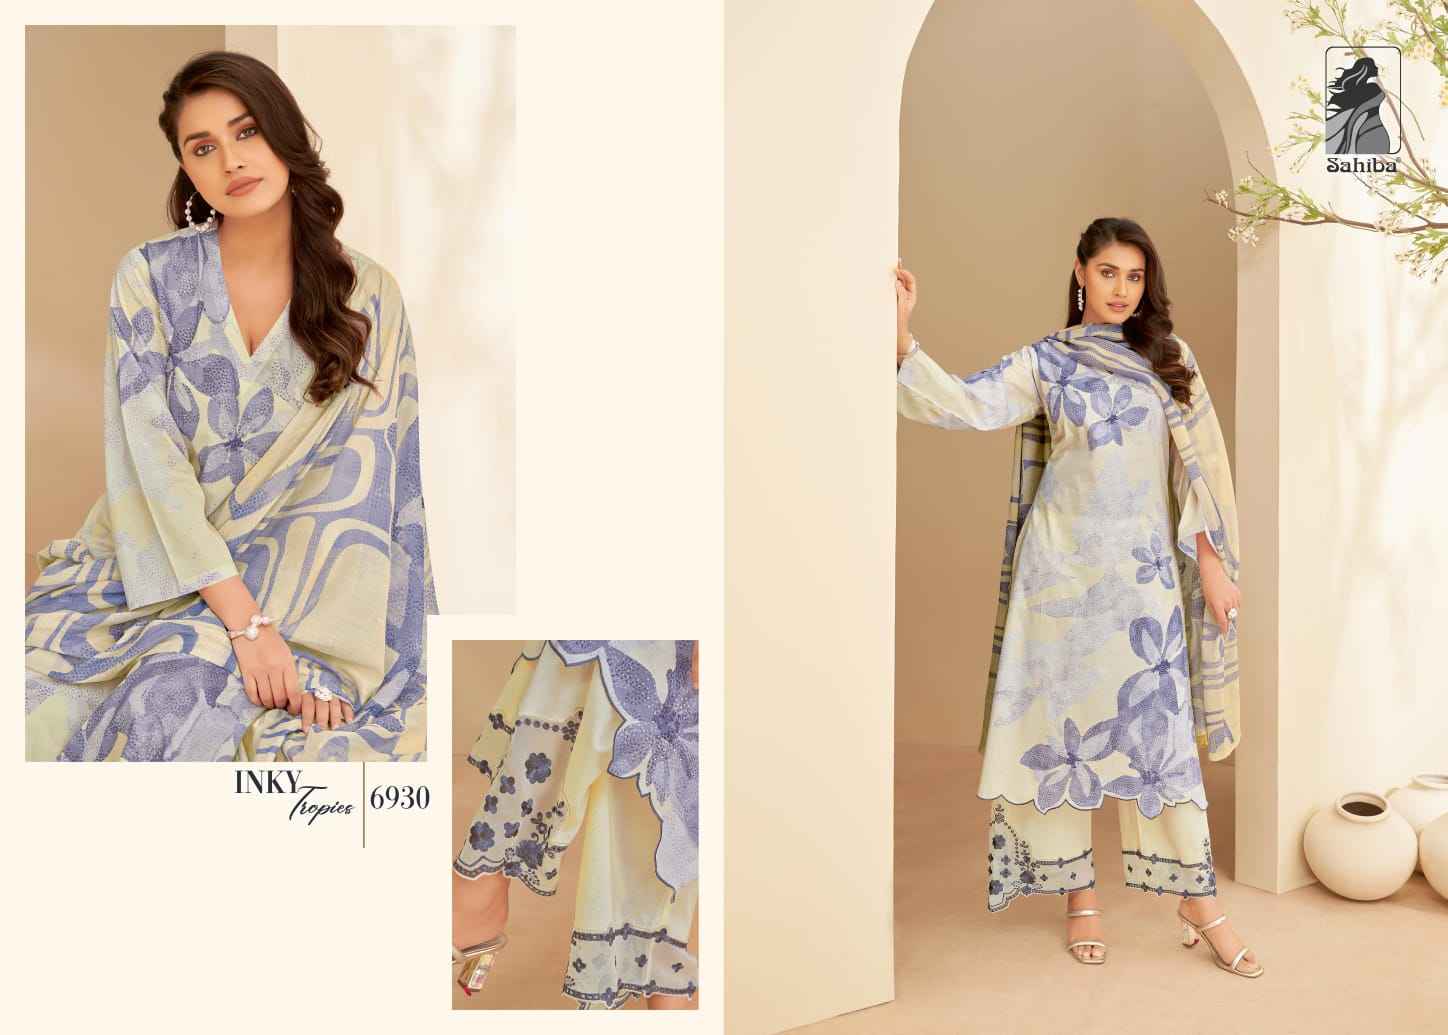 Sahiba Inky Tropies Moscow Cotton Dress Material (3 Pc Catalog)